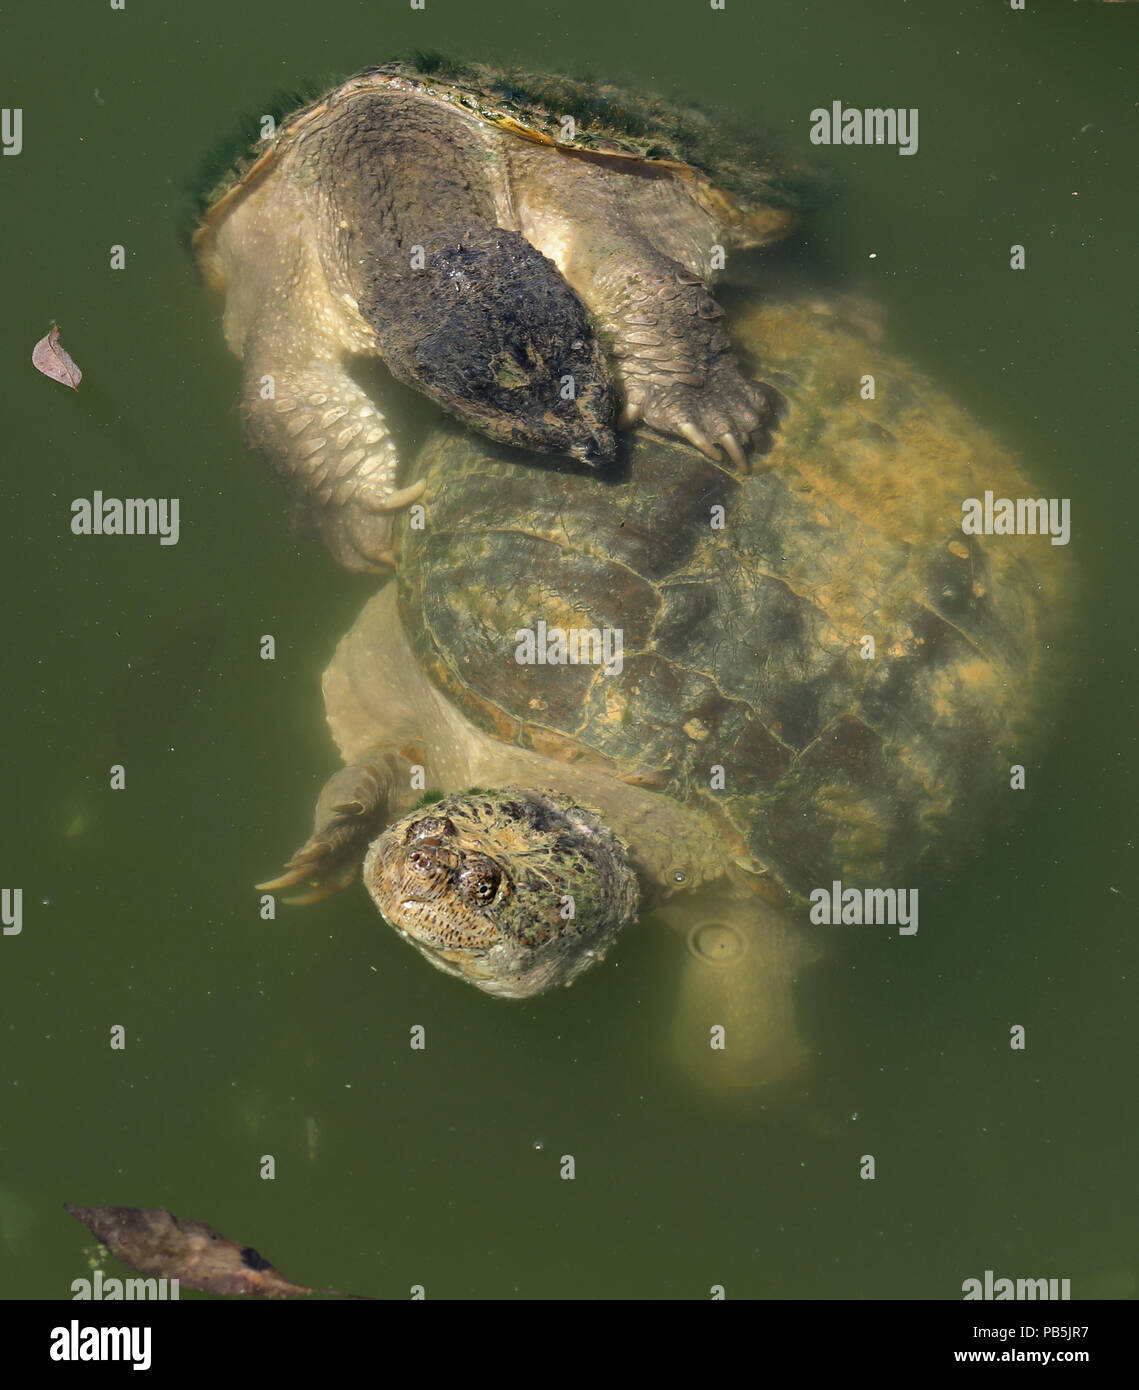 snapping turtles, Chelydra serpentina, mating, Maryland Stock Photo